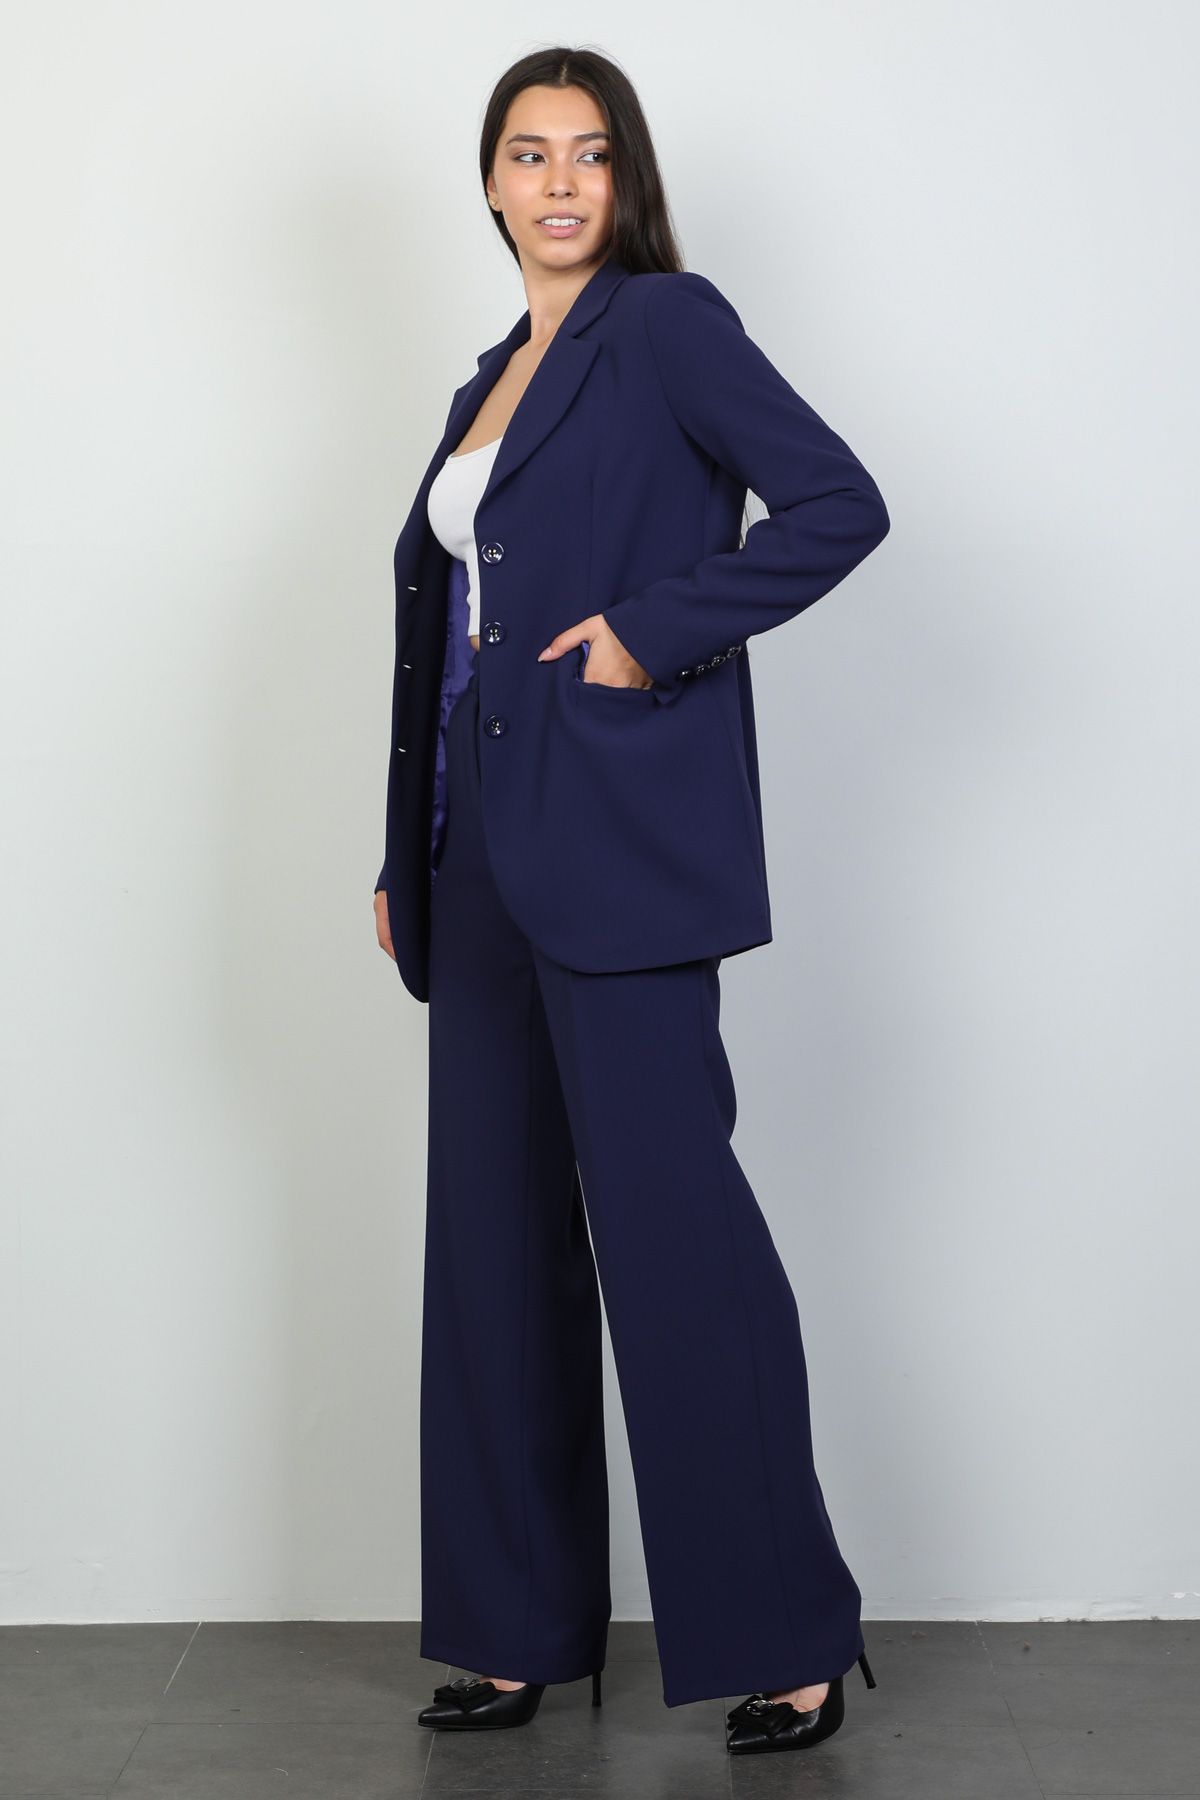 2 Piece Set Women Office Uniform Business Suits Career Trousers and Blazer  | eBay